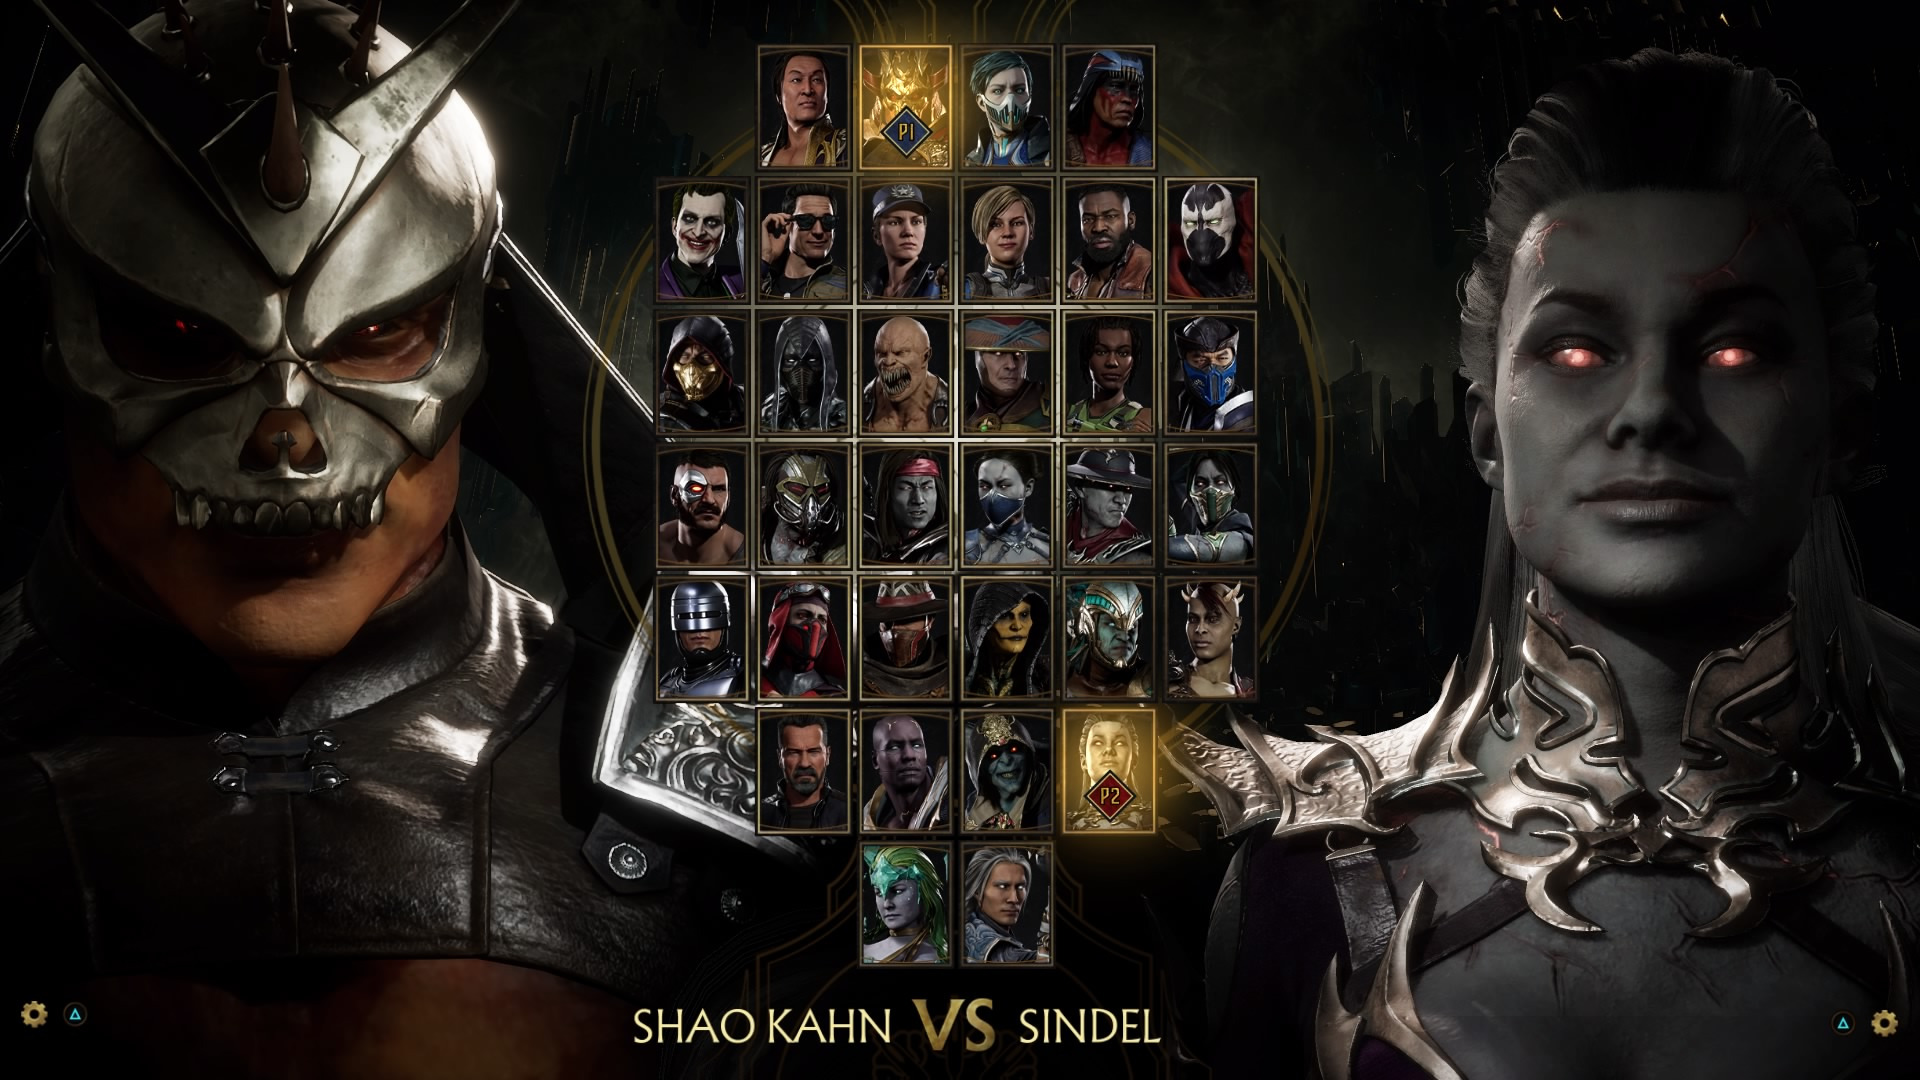 Скриншот 🥷 Mortal Kombat 11 💎Ultimate Edition [STEAM] Аккаунт